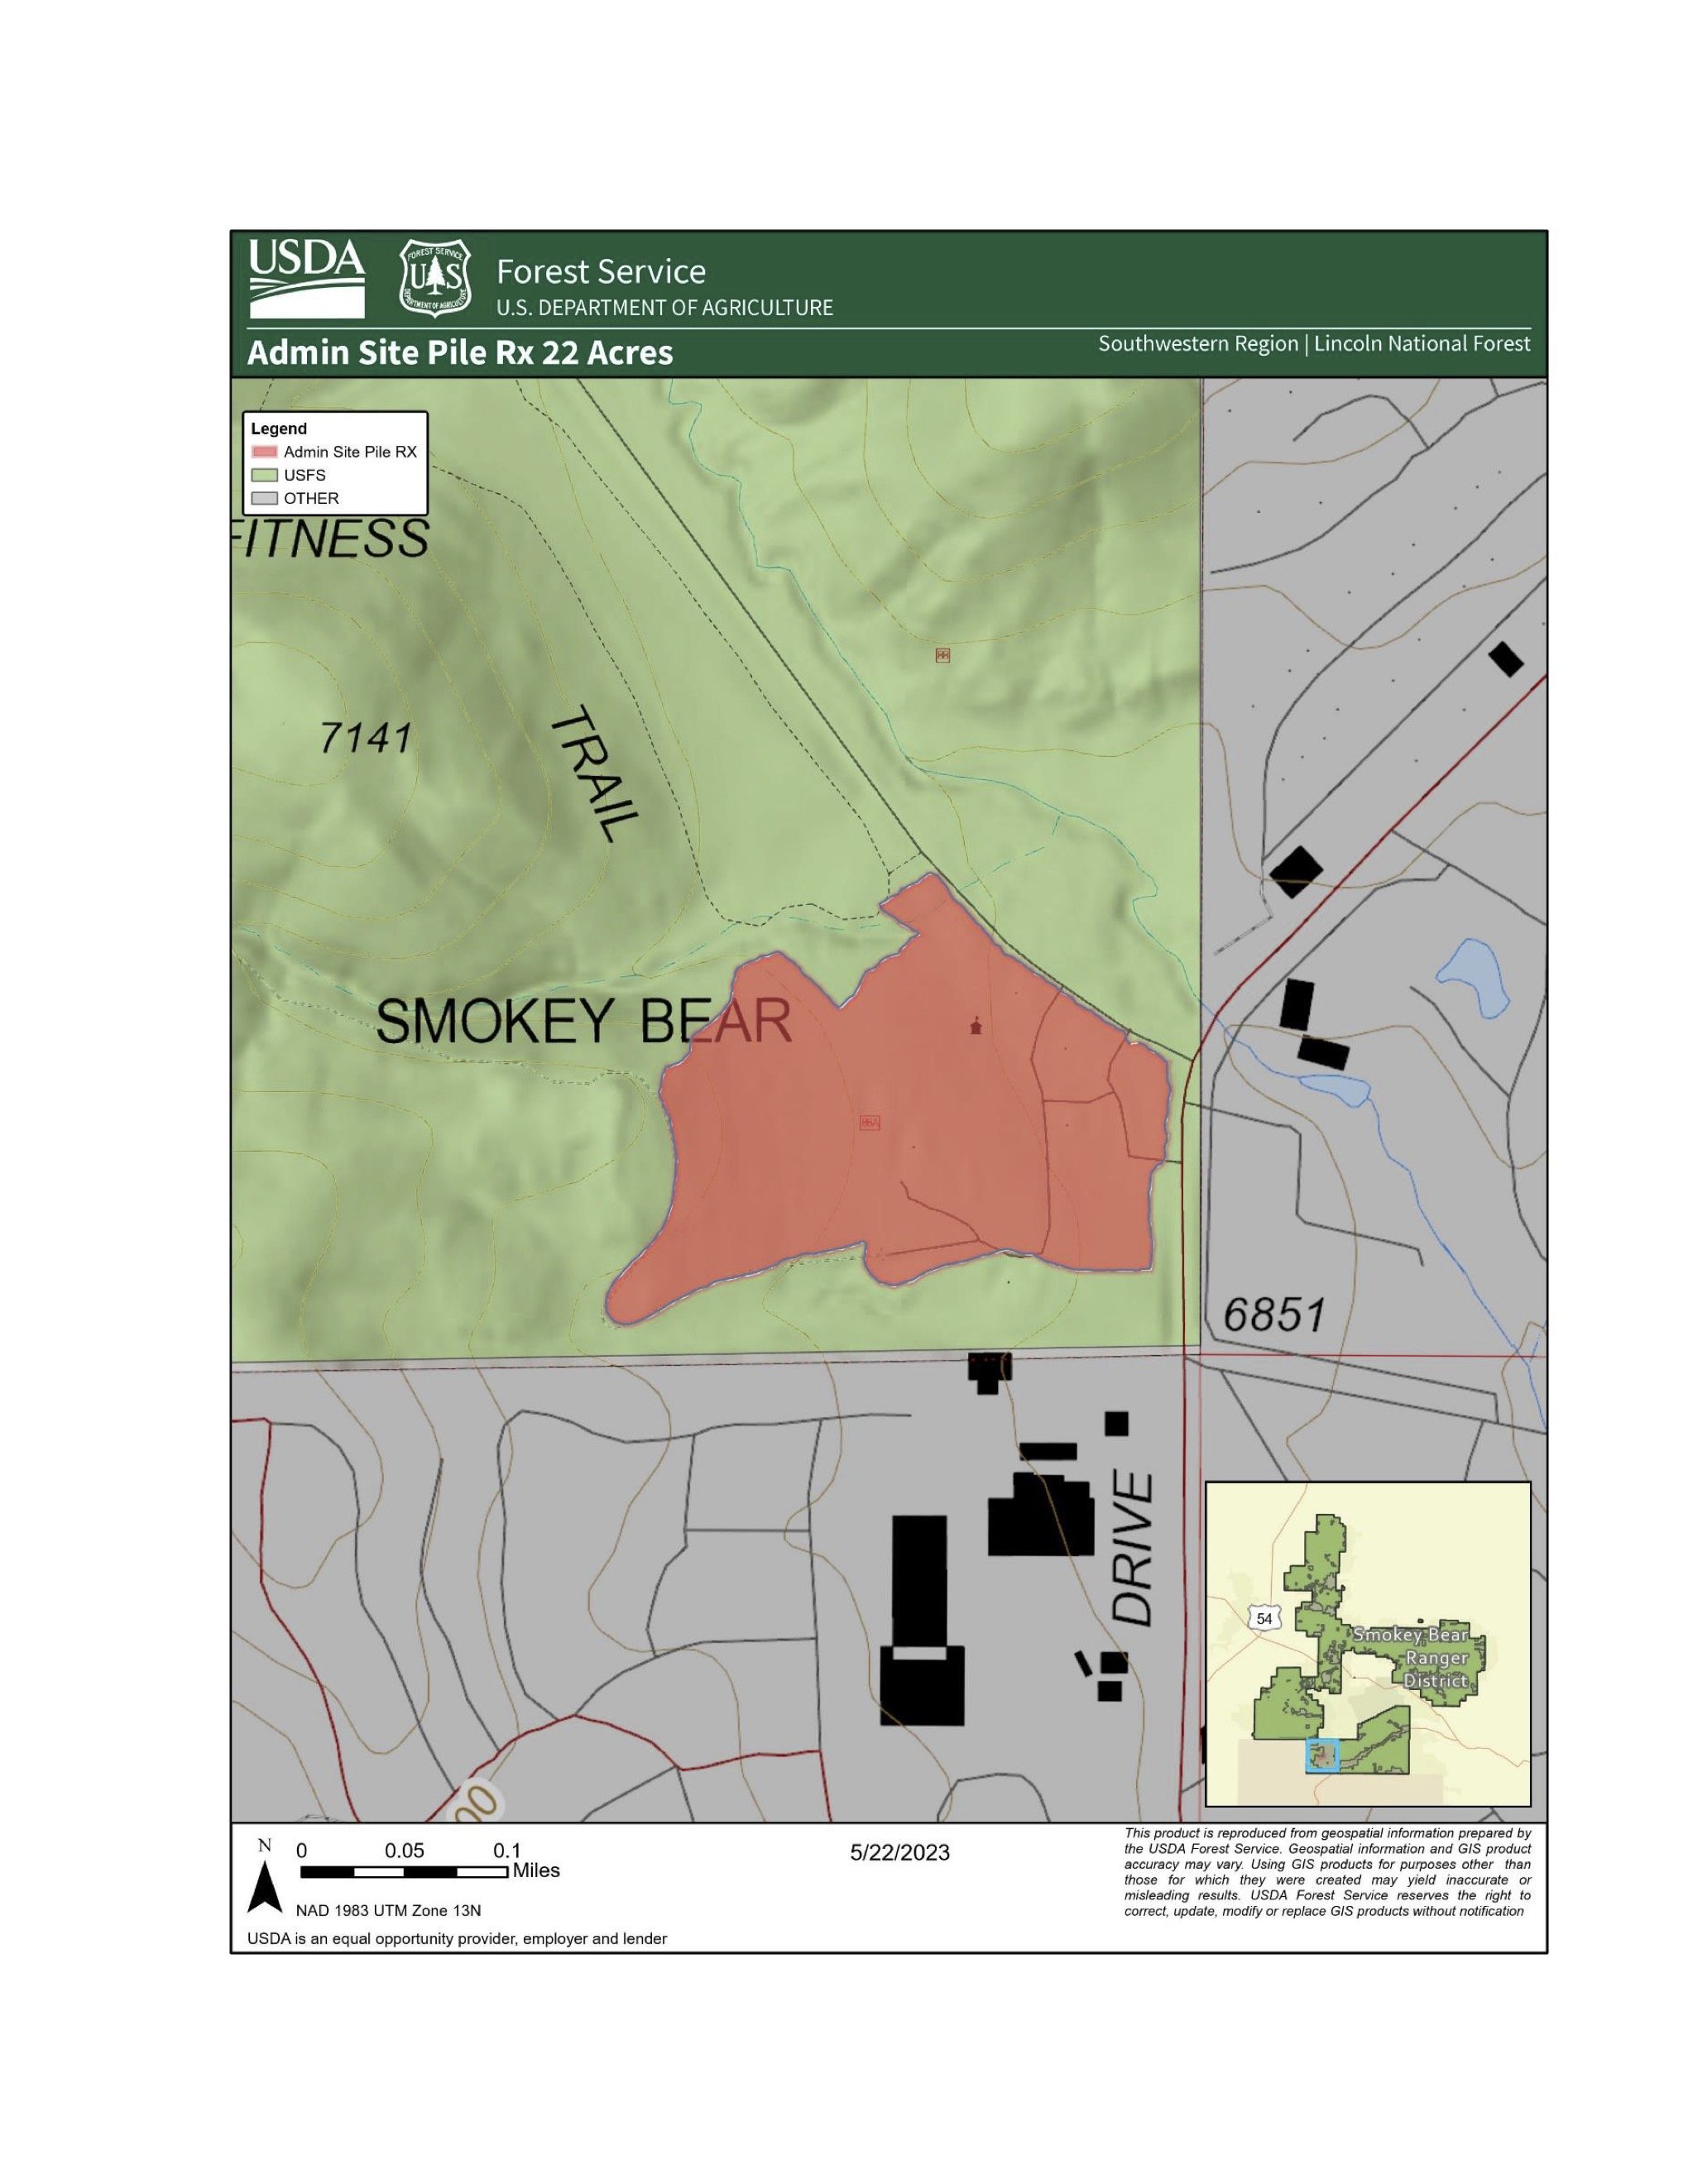 2-7SEPT23_USFS News Release_RX Burn in Smokey Bear Ranger District.jpg